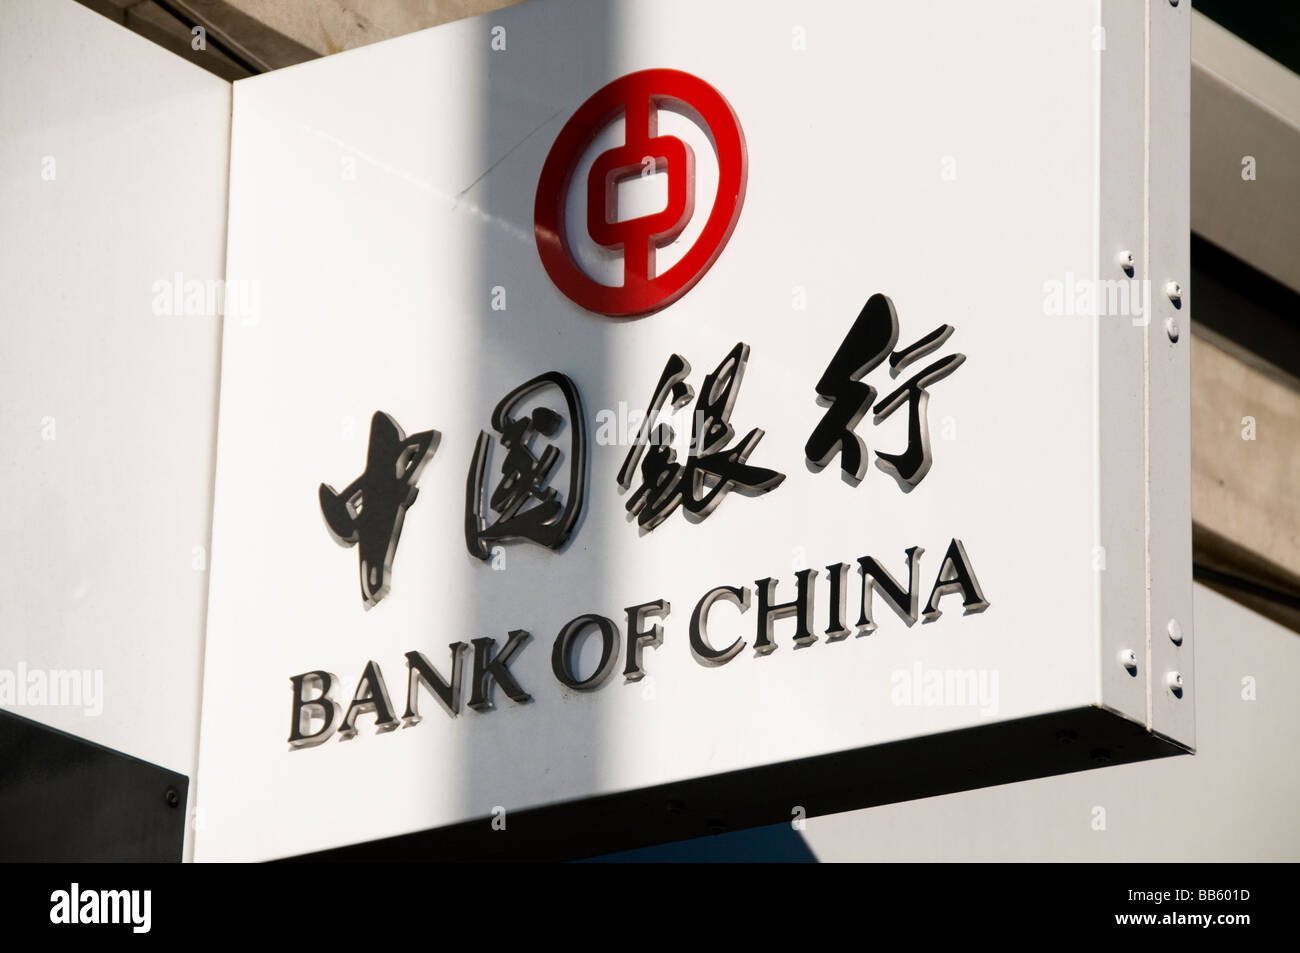 Bank Of China Sign Stock Photos & Bank Of China Sign Stock ...